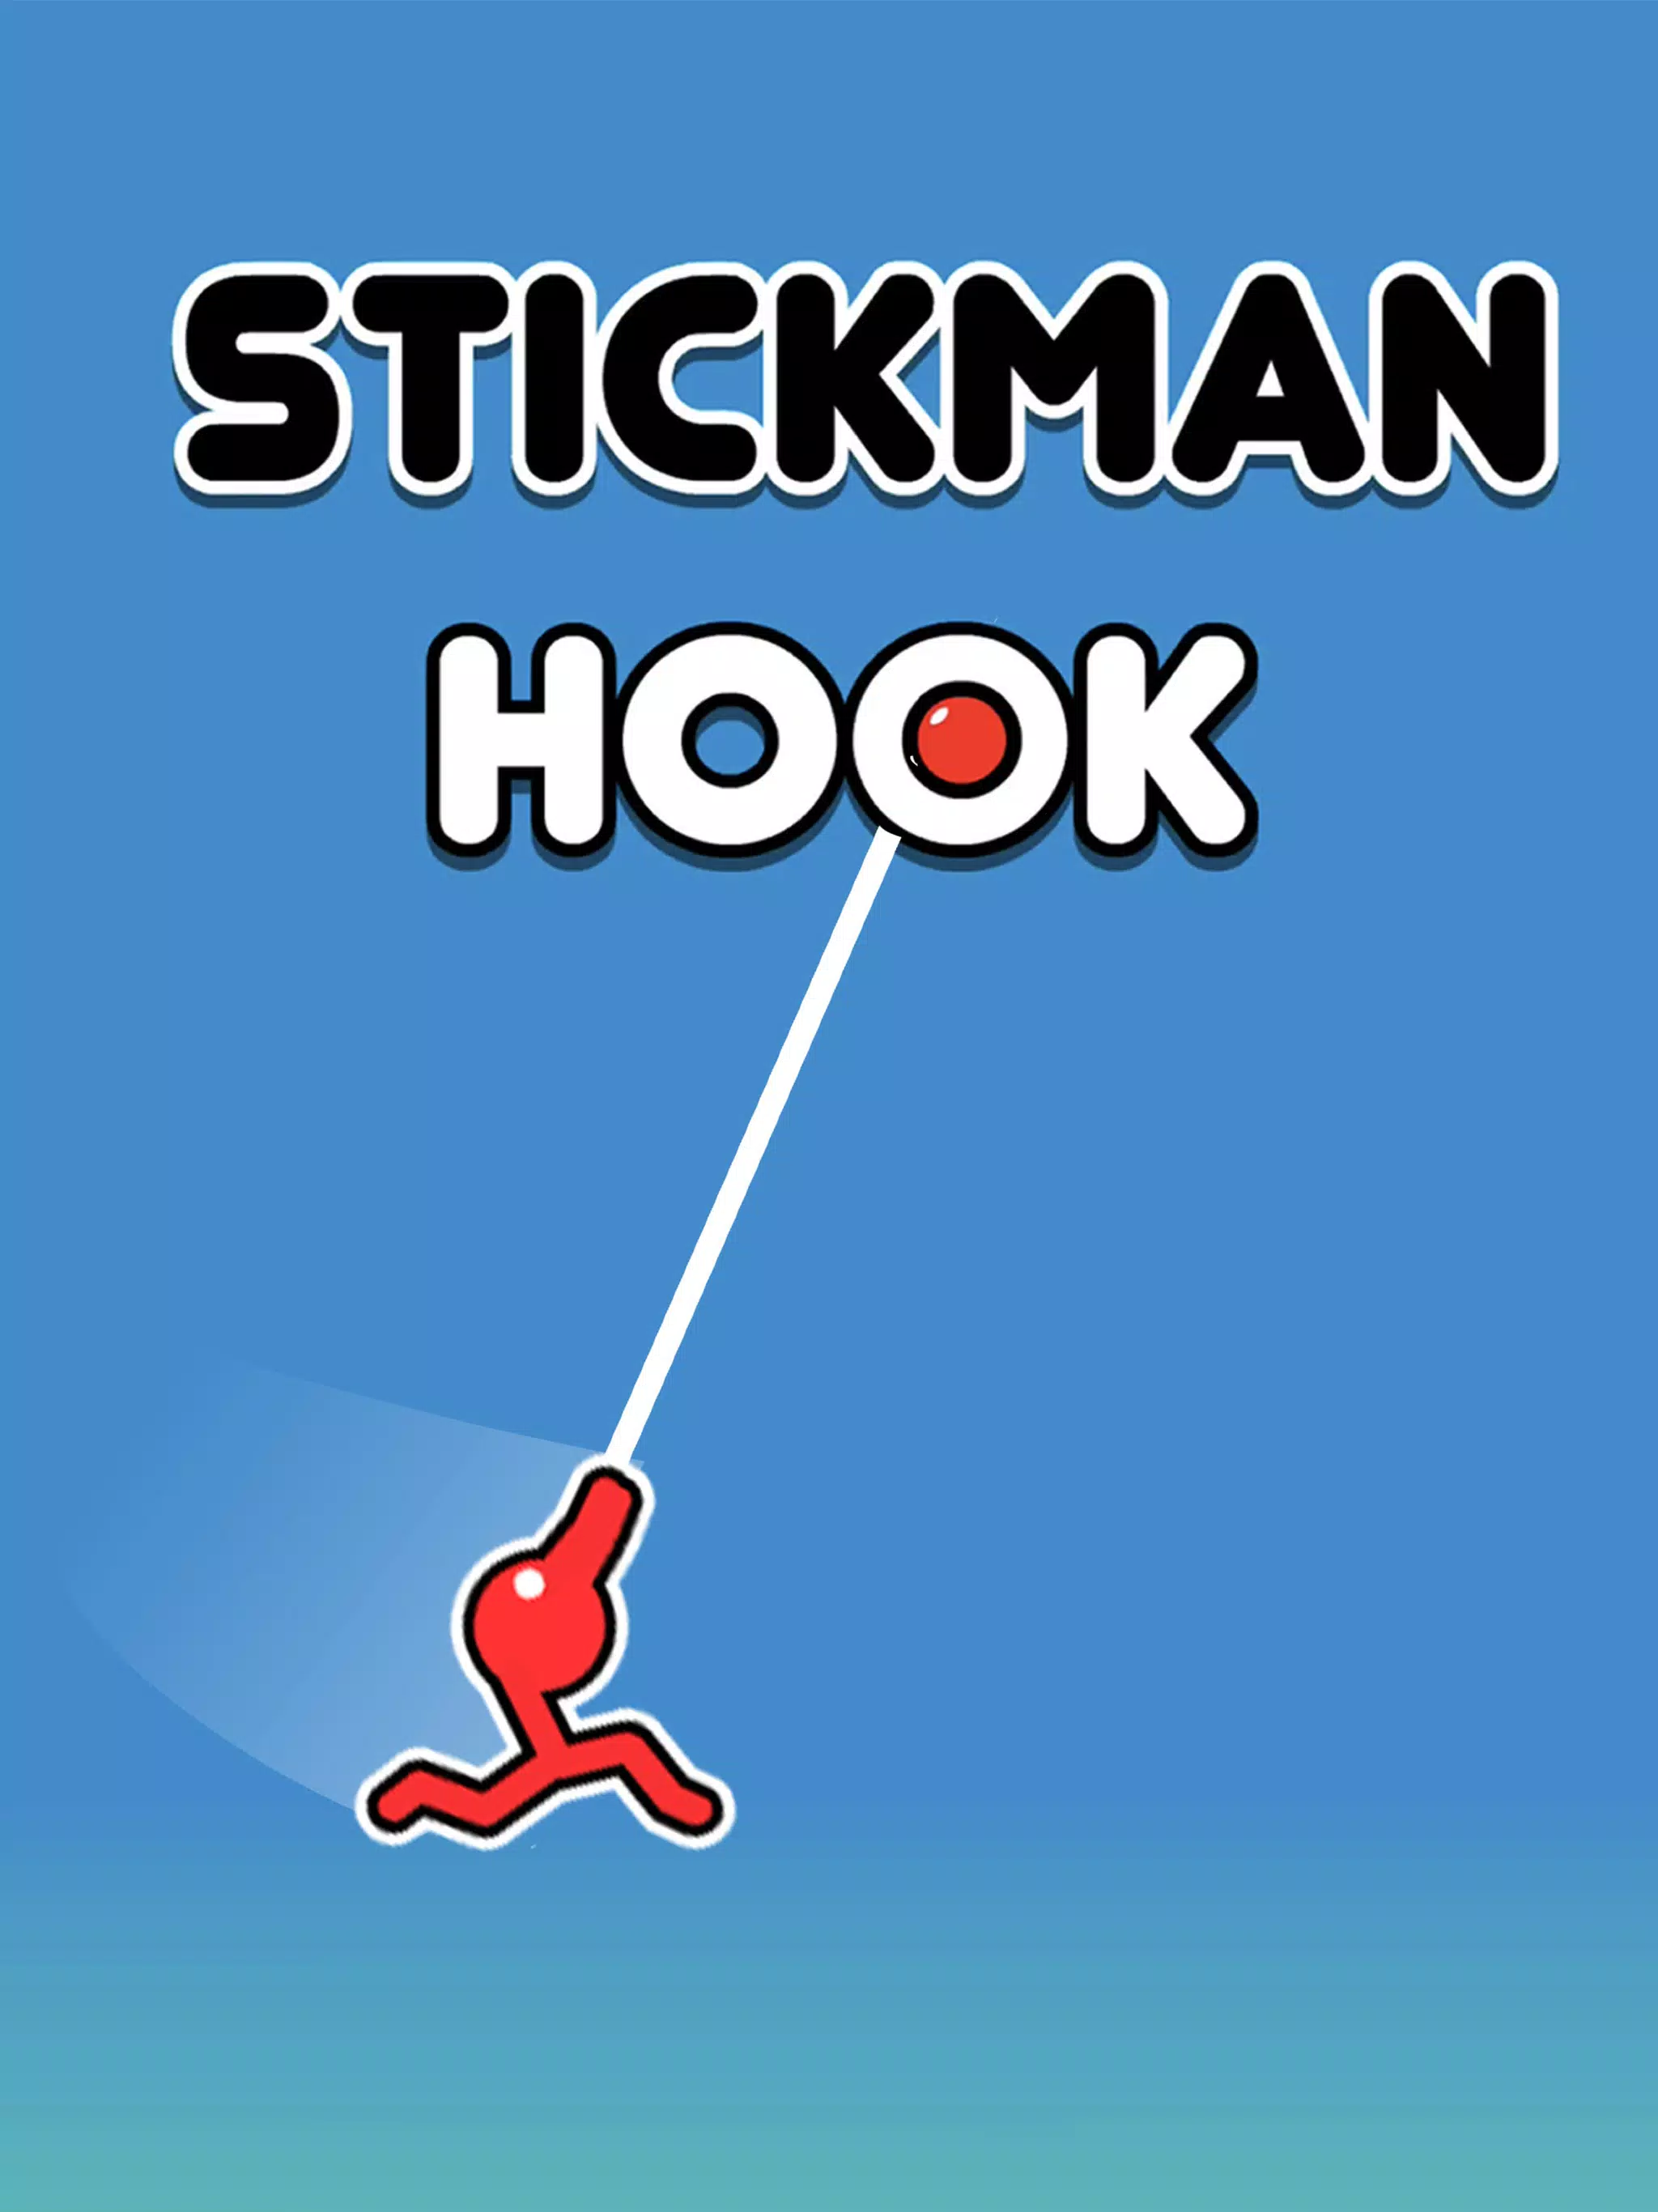 Stickman Hook Mod apk [Remove ads][Unlocked] download - Stickman Hook MOD  apk 9.4.0 free for Android.